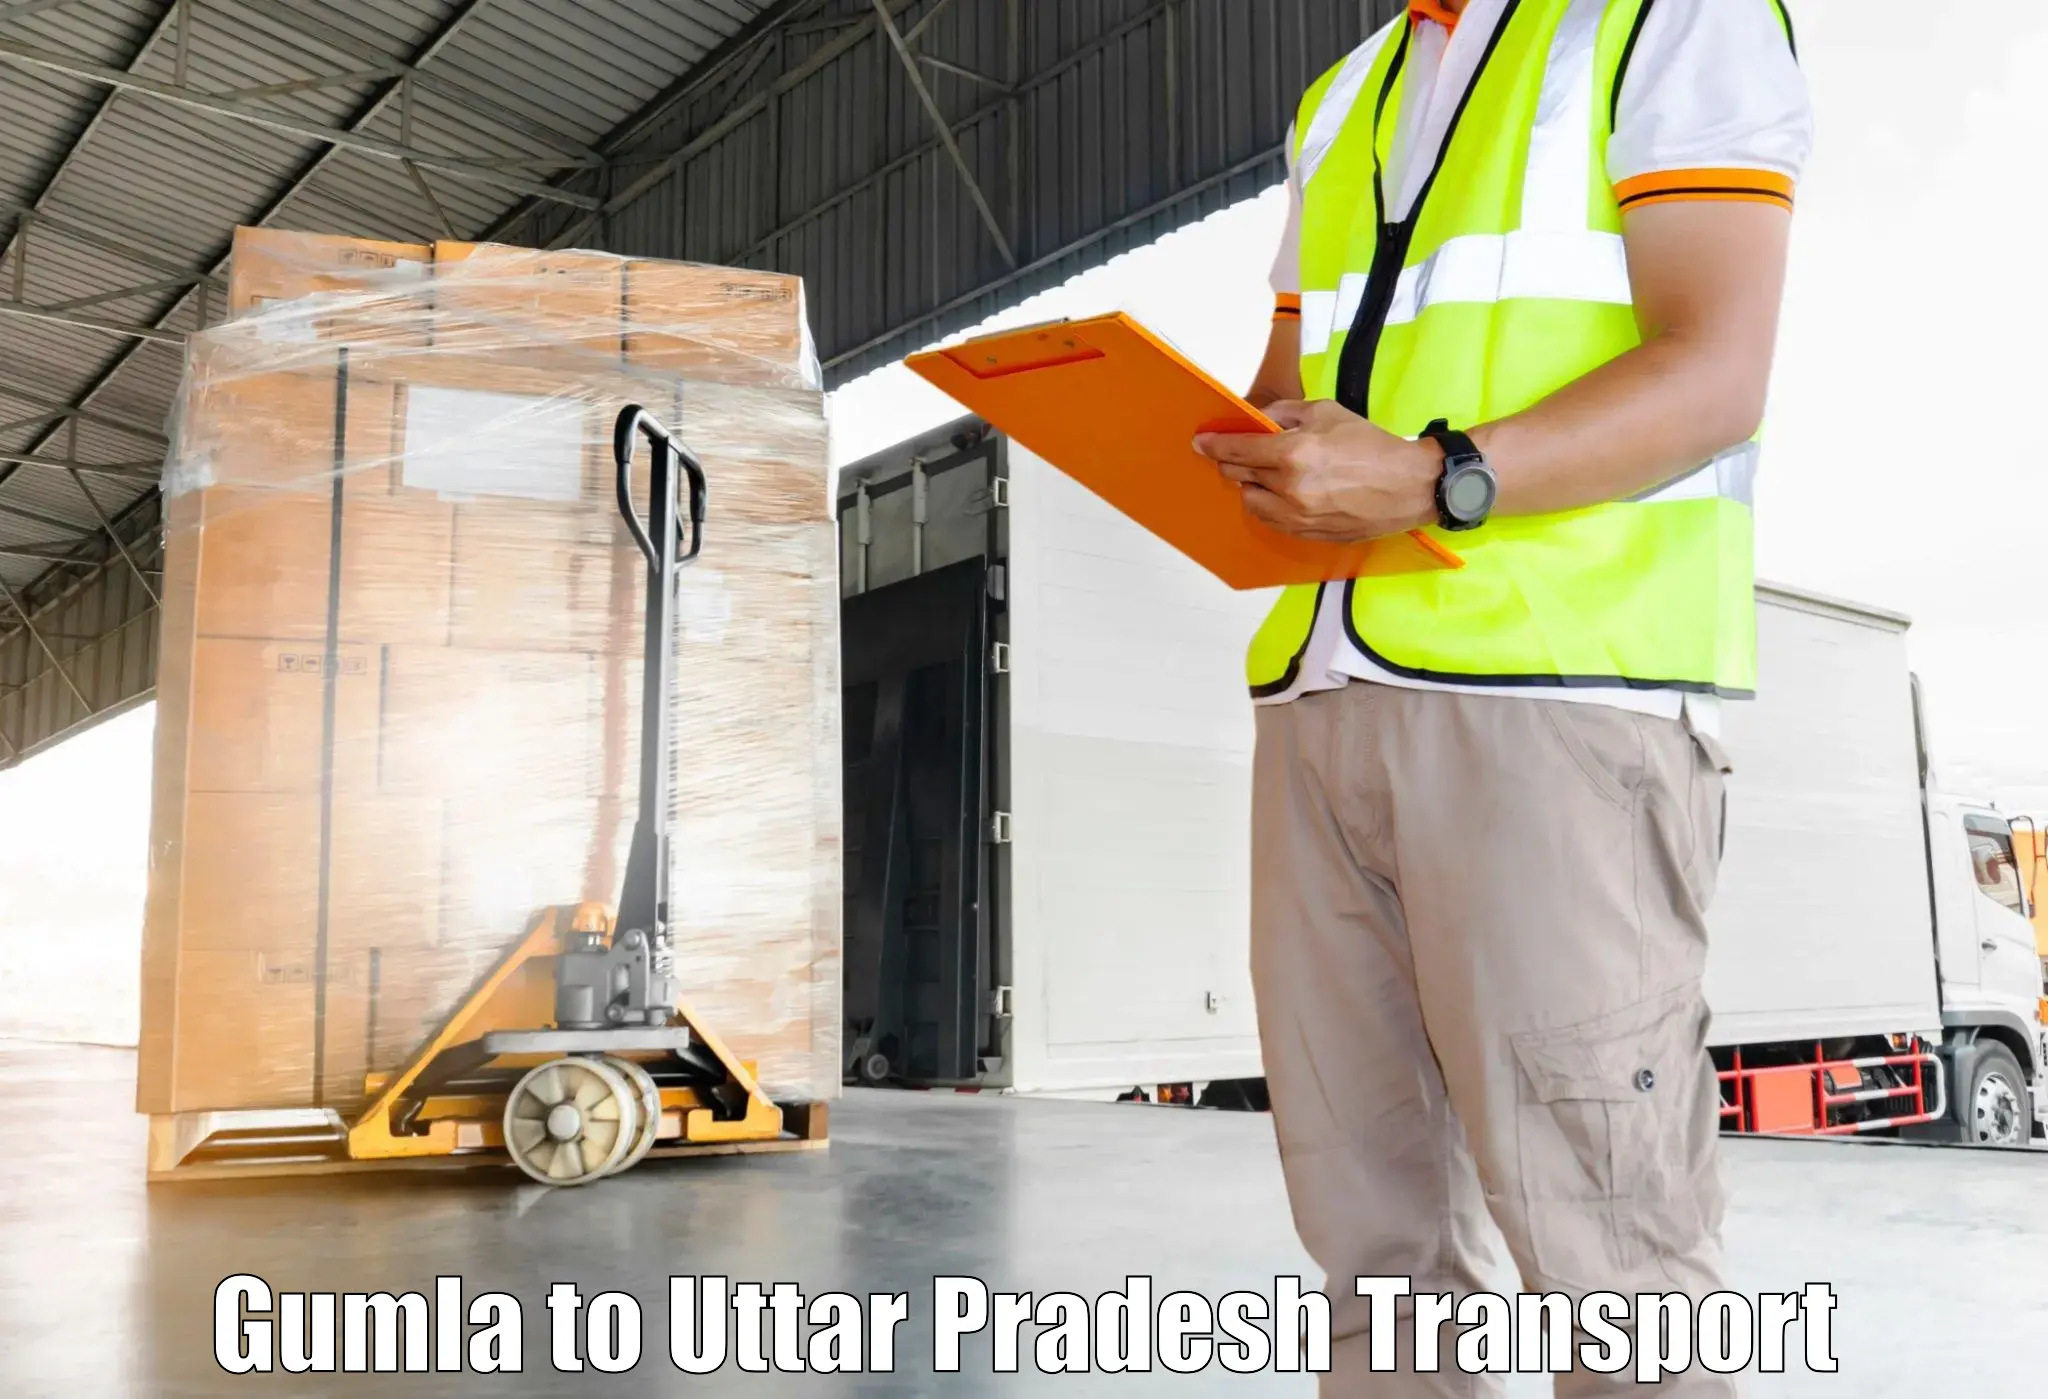 Truck transport companies in India Gumla to Sahatwar